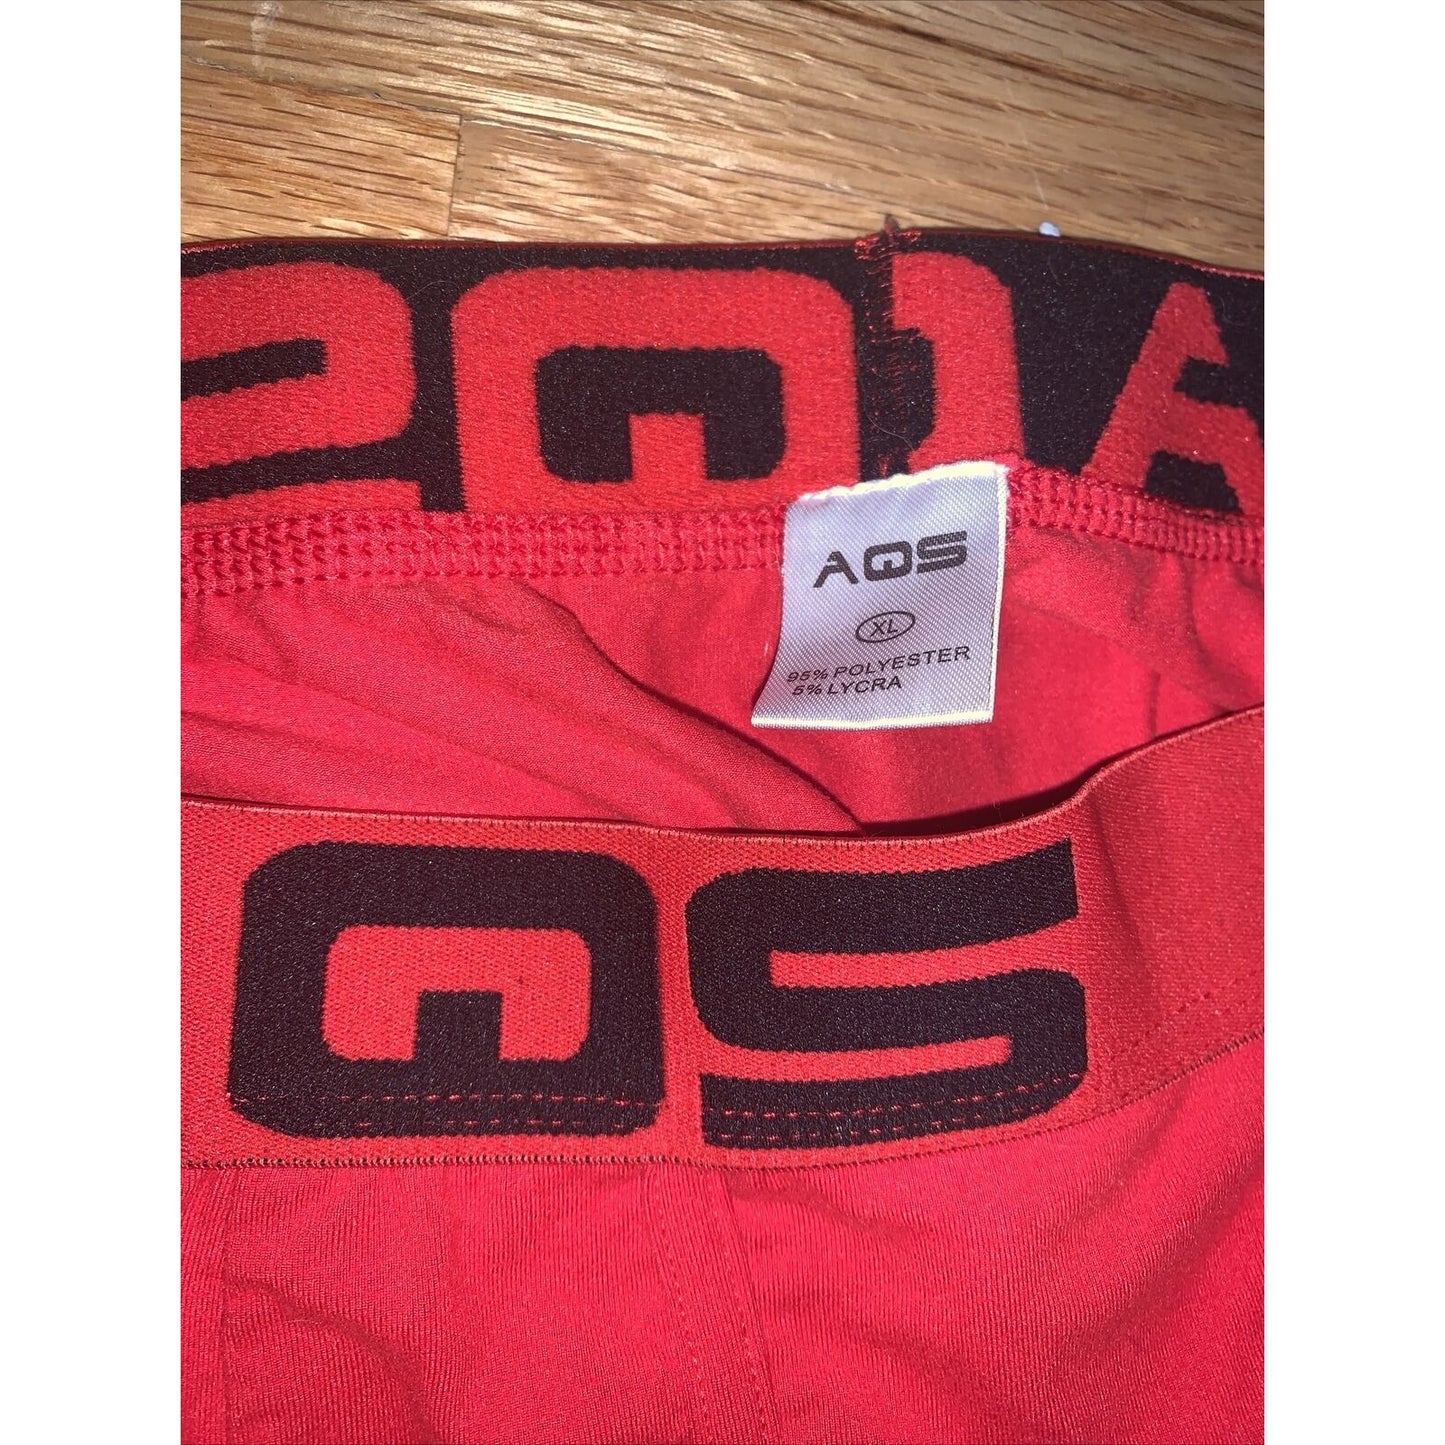 AQS Men’s XL Red Boxer Briefs Poly Lycra